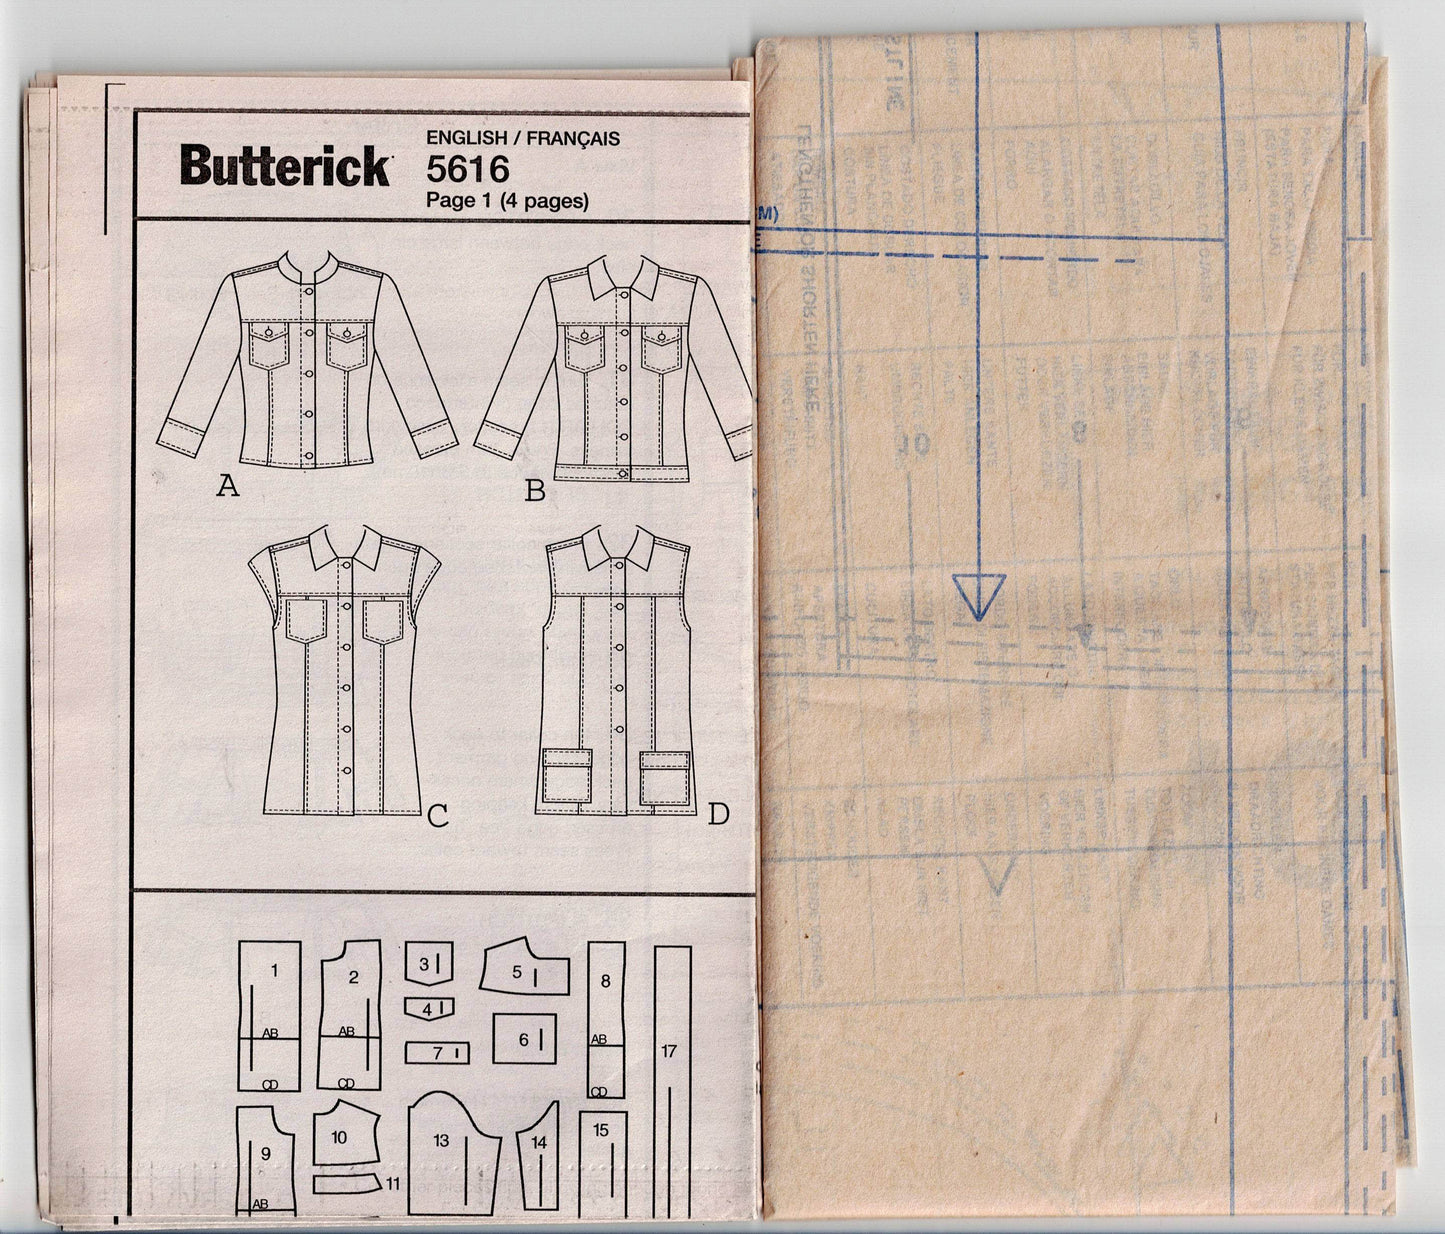 Butterick 5616 Womens Between Season Bomber Style Jackets Sewing Pattern Size 6 - 12 UNCUT Factory Folded